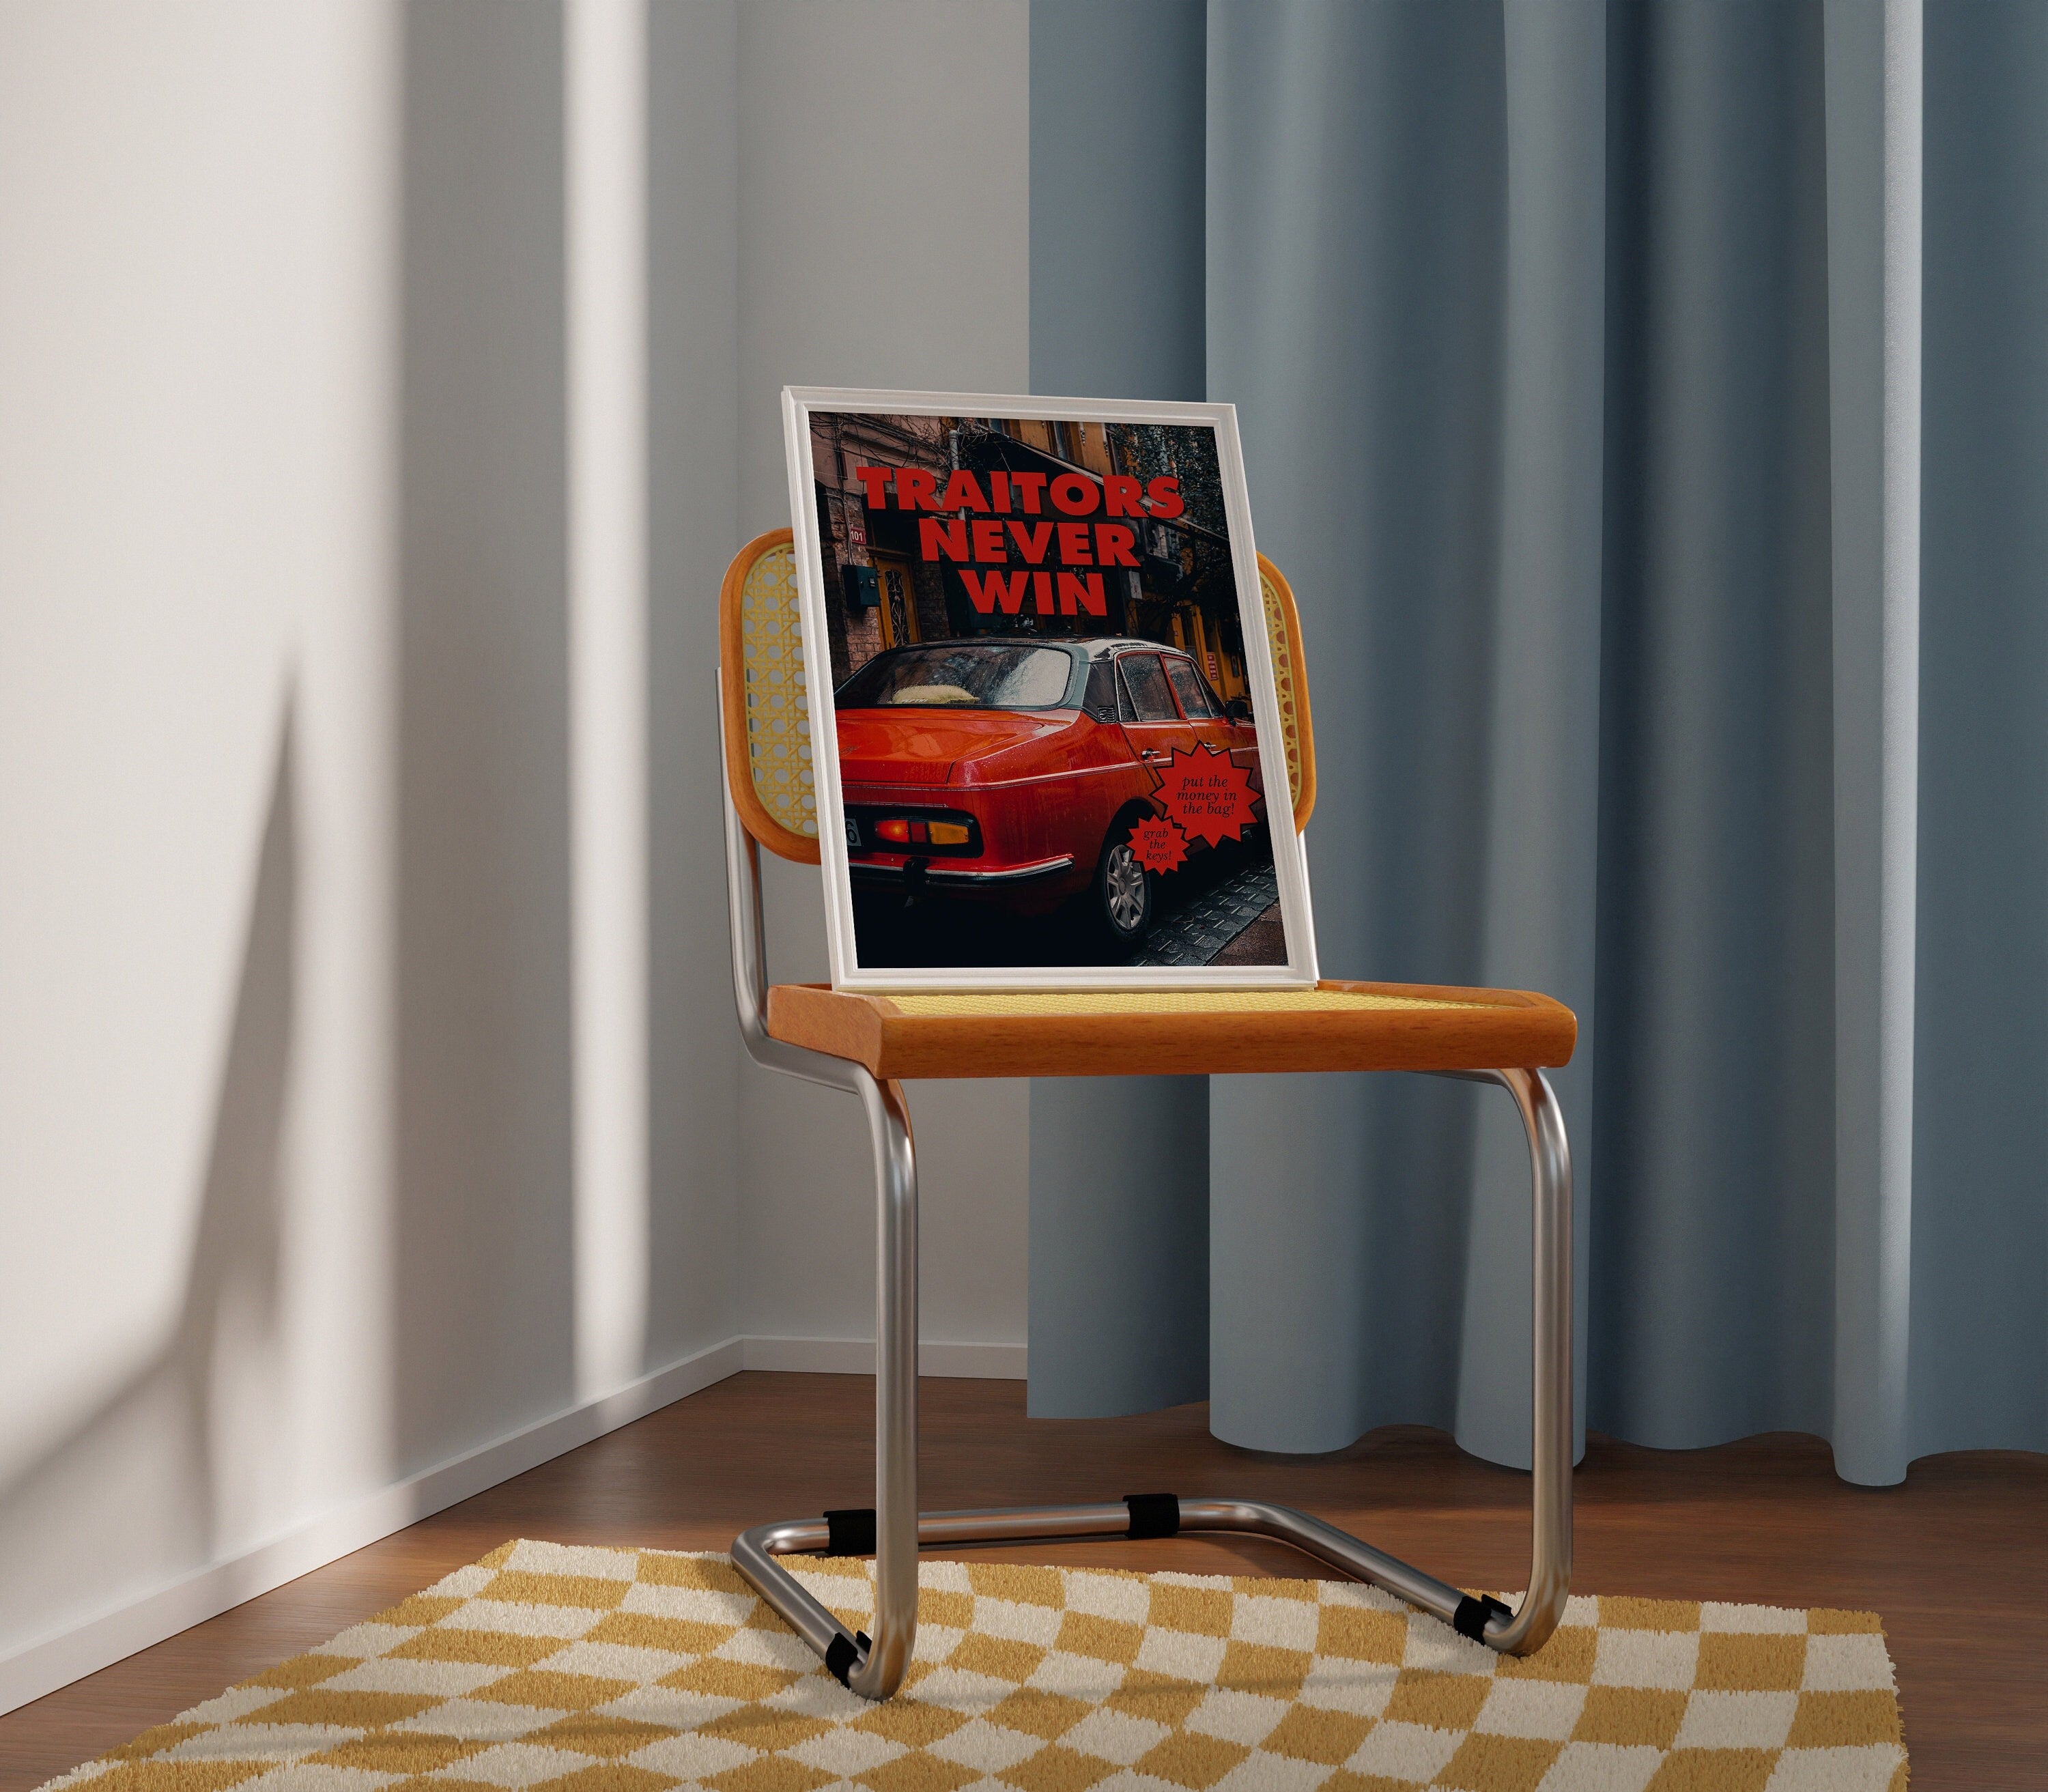 Getaway Car Red Taylor Swift Digital Art Print